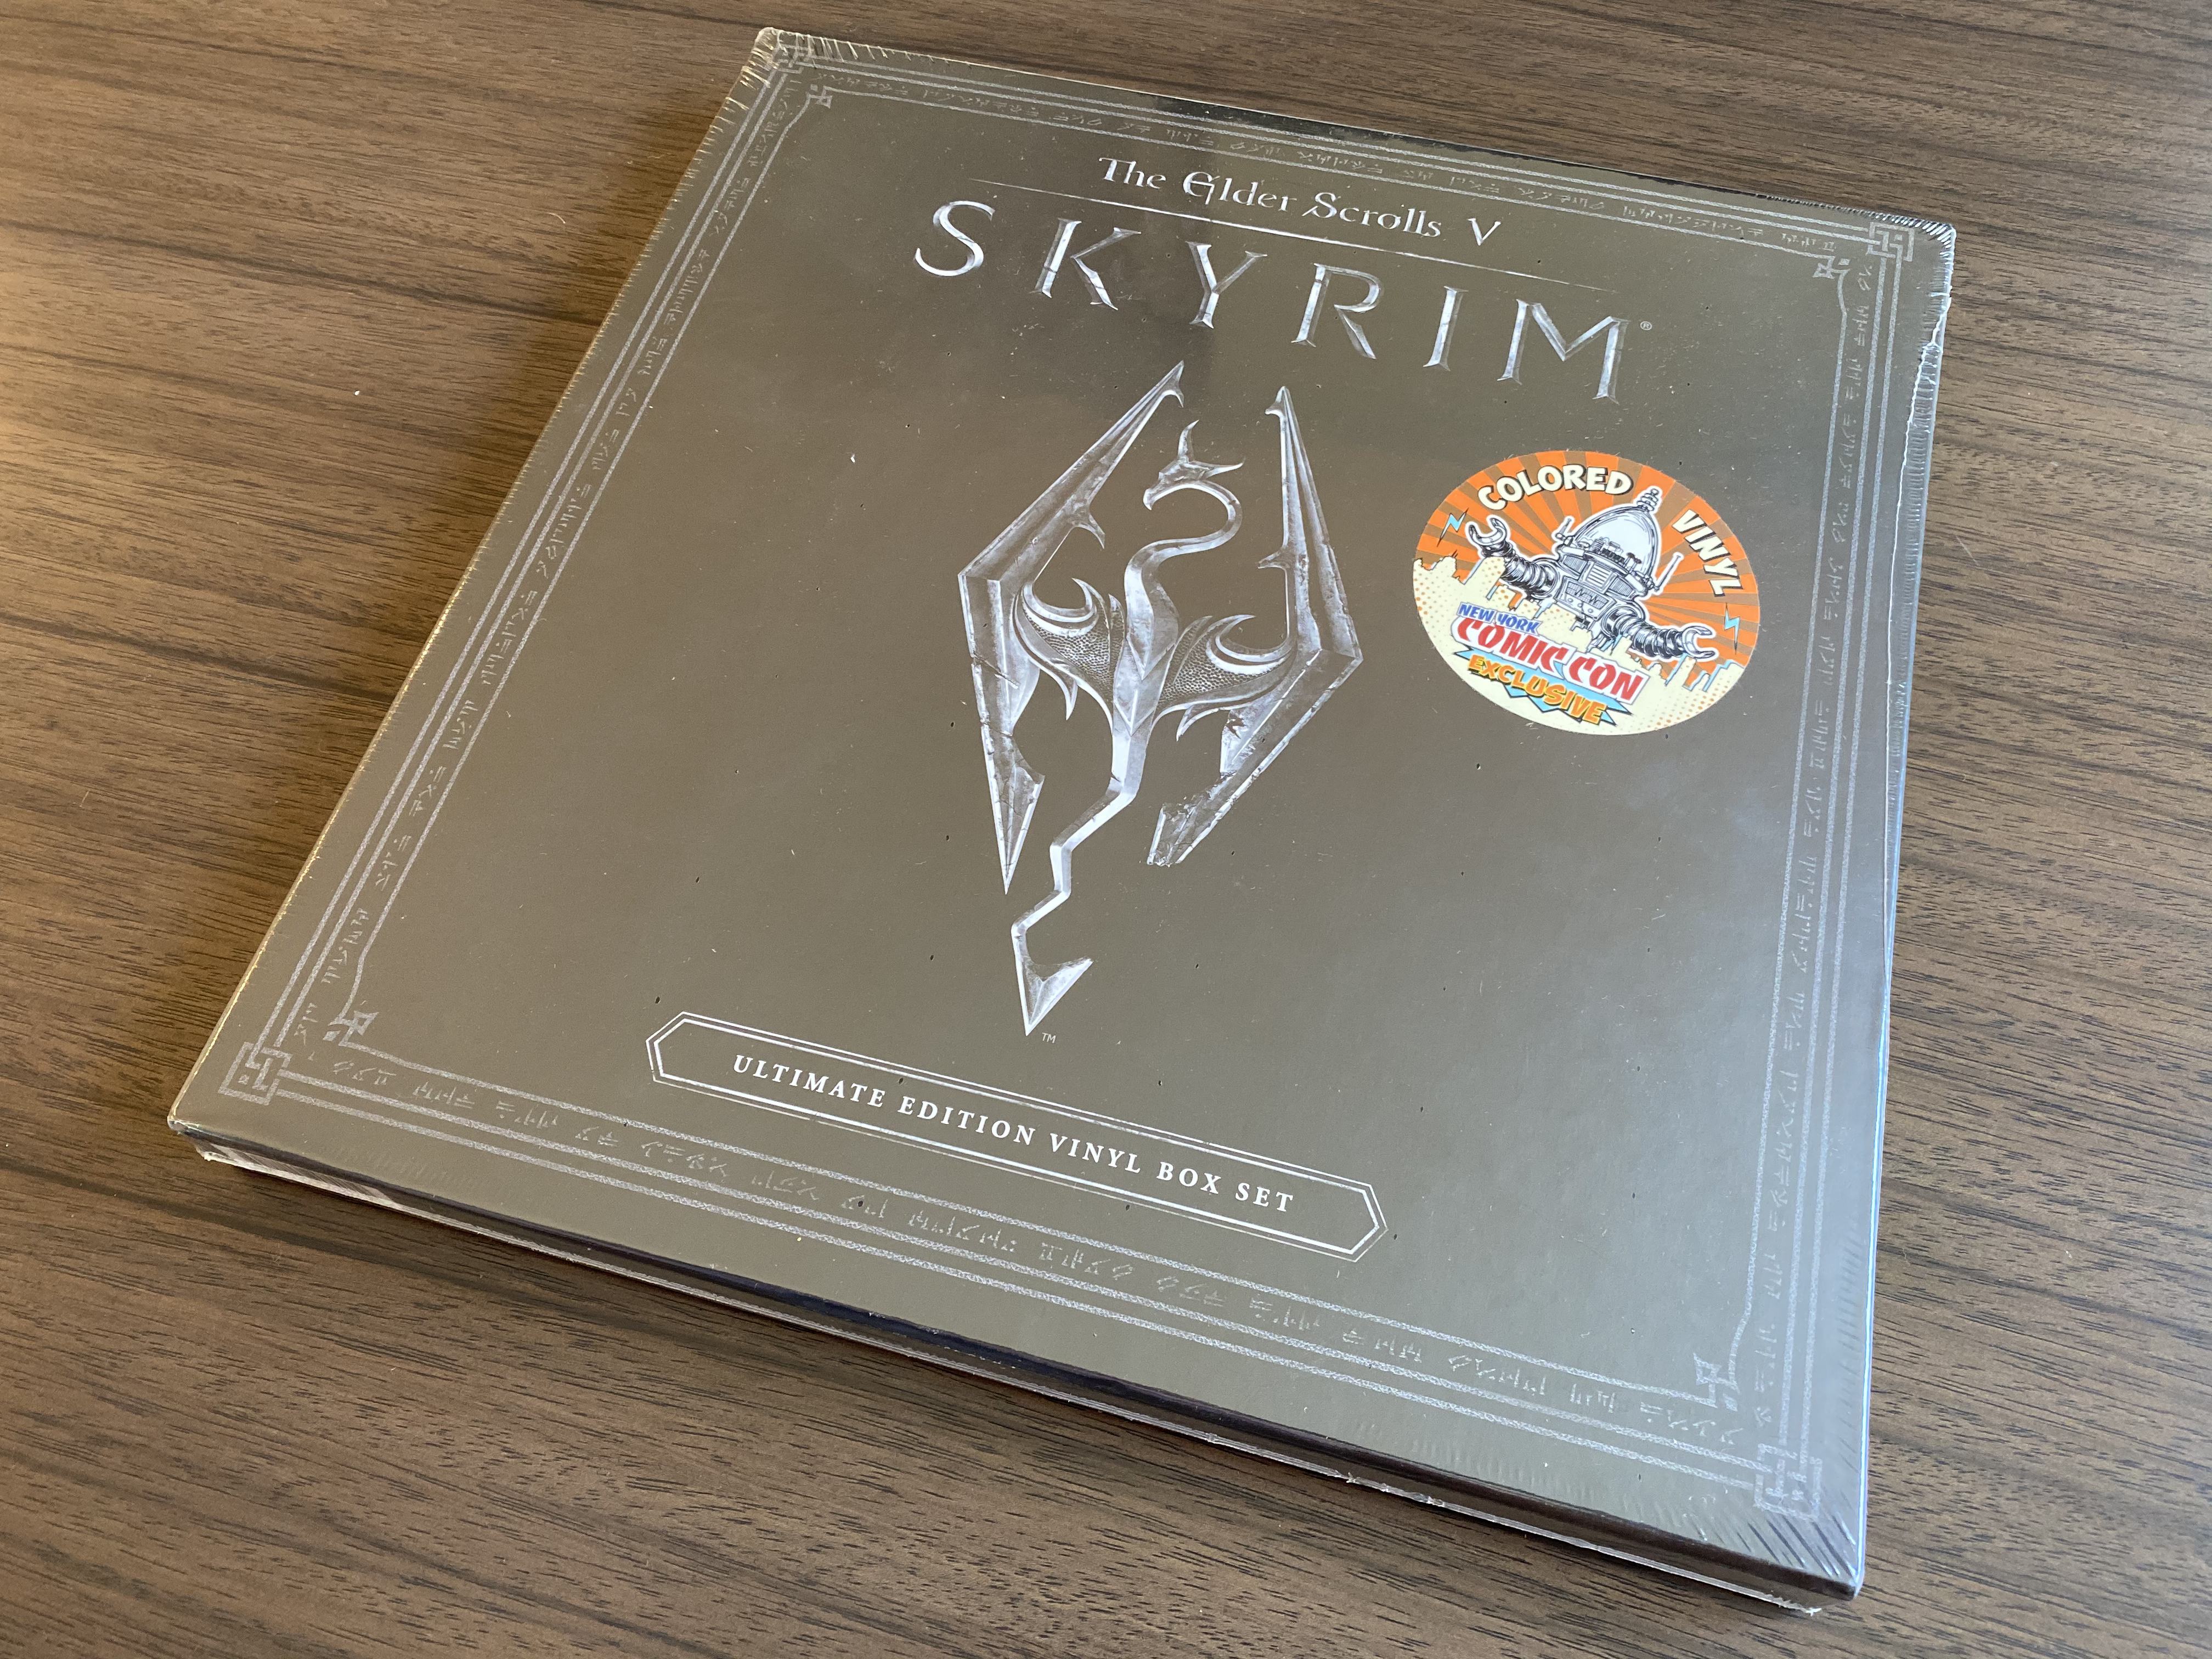 Kennon-Green Elder Scrolls V Skyrim Ultimate Edition Vinyl Box Set Sweet Roll Comic Con Limited LP - Sealed